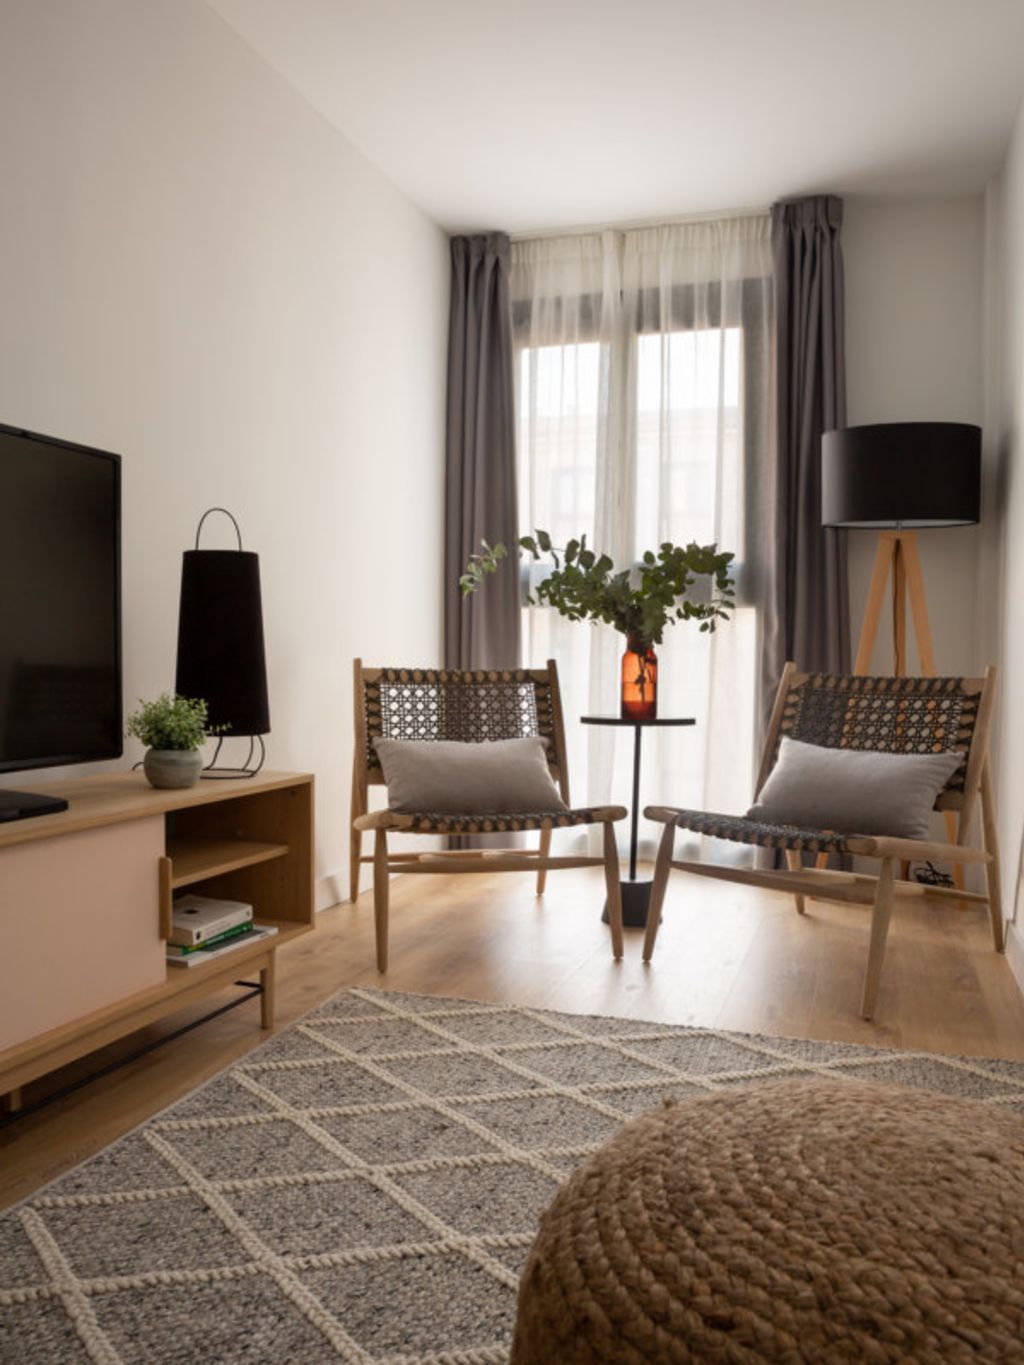 Incredible fully furnished flat - UBK-466846 - Incredible fully furnished flat